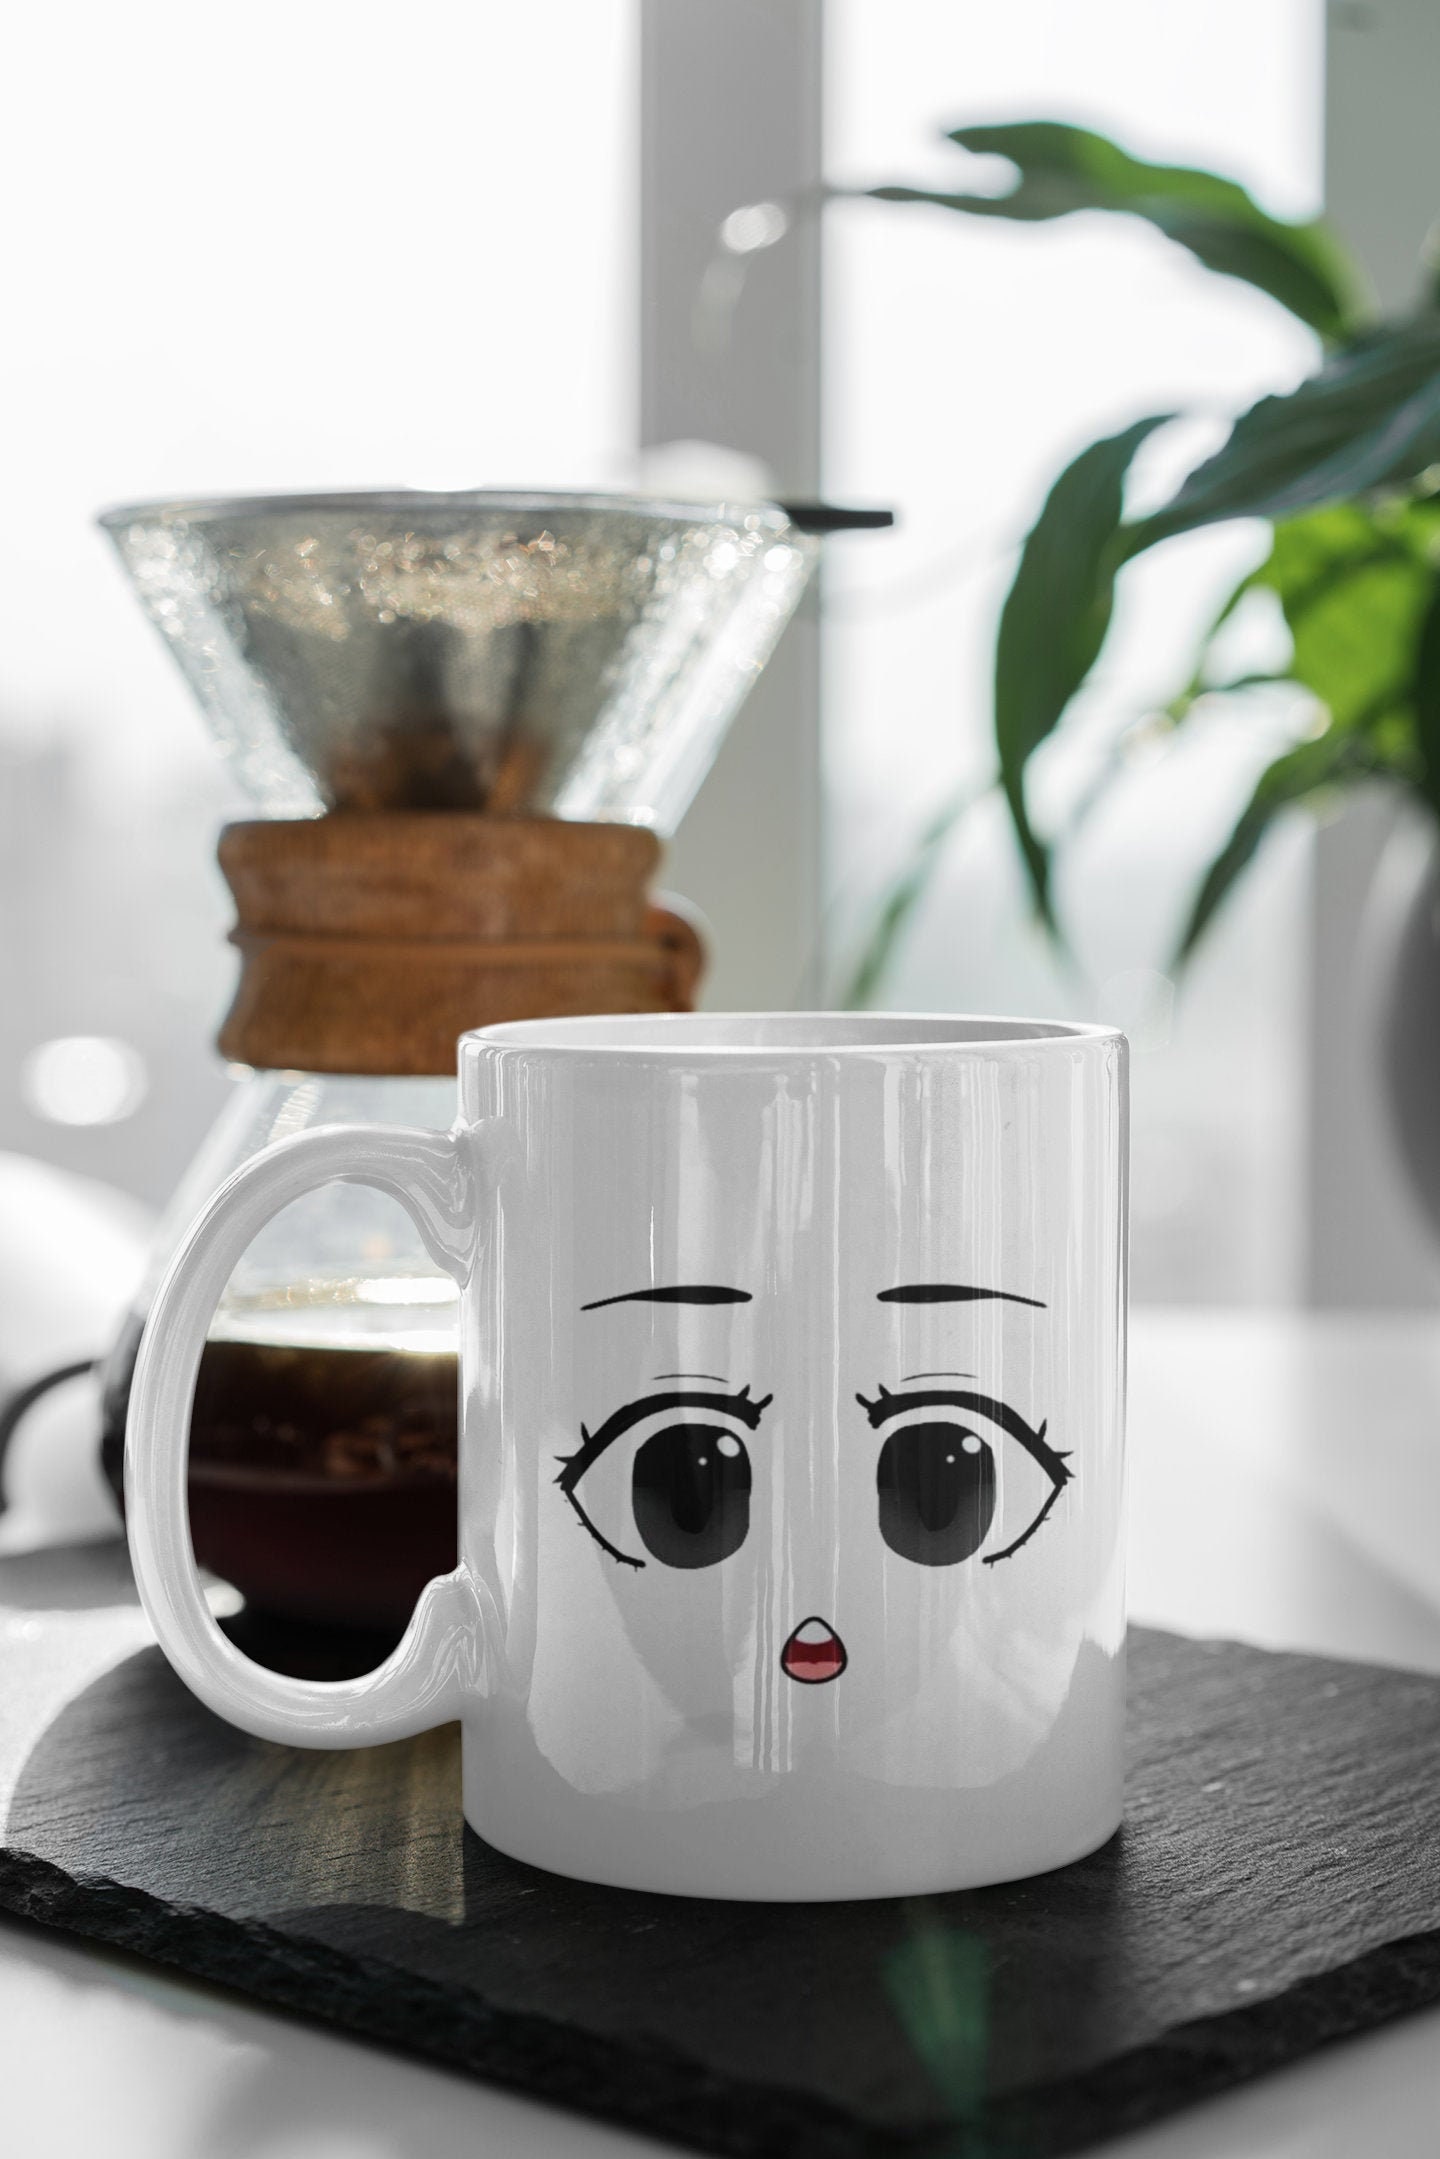 Roblox Man Face Coffee Mug for Sale by Sofiagandola in 2023